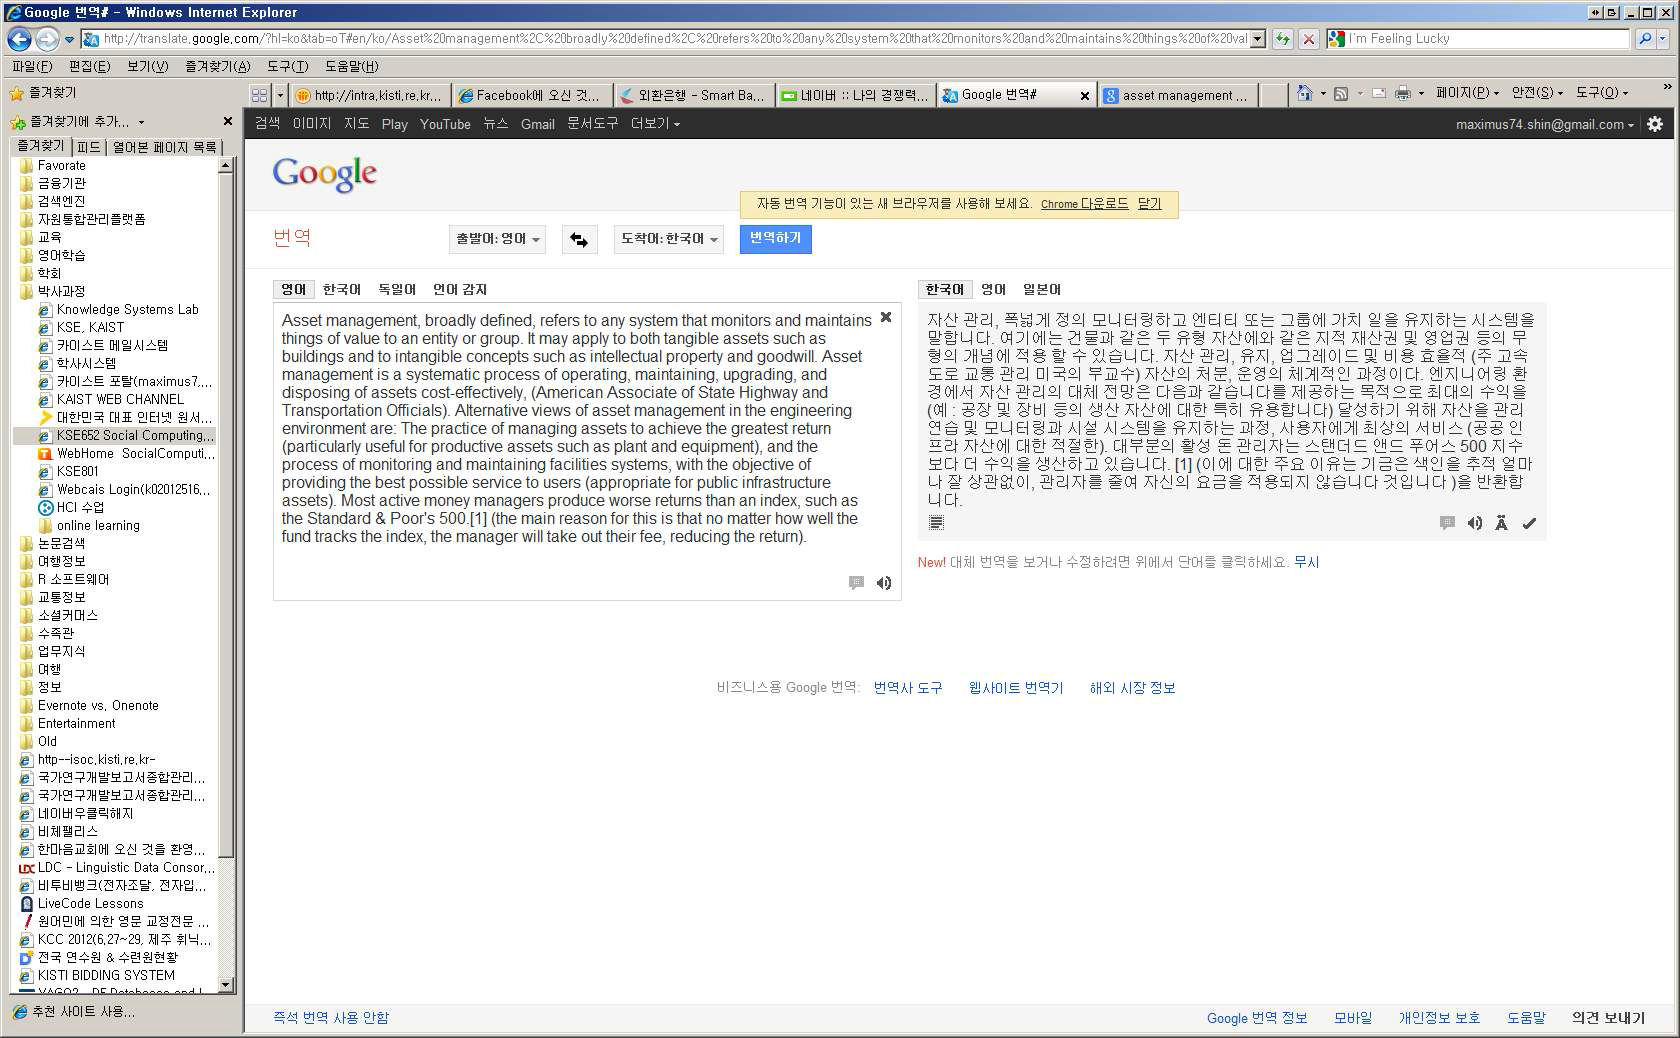 The screen-shot of Google translation service